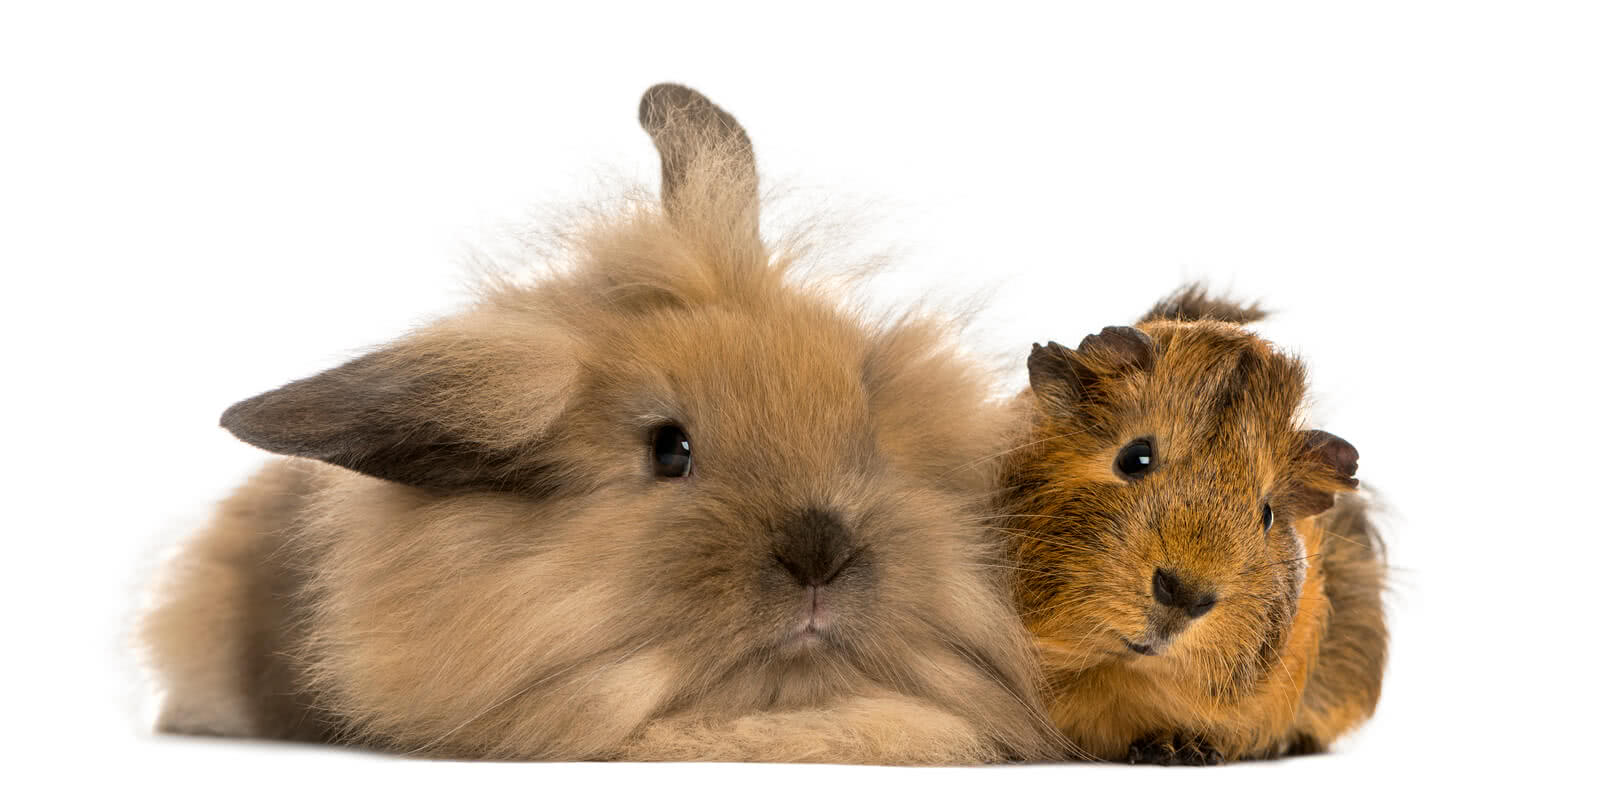 angora rabbit and guinea pig isolated on white 2021 08 26 18 03 04 utc